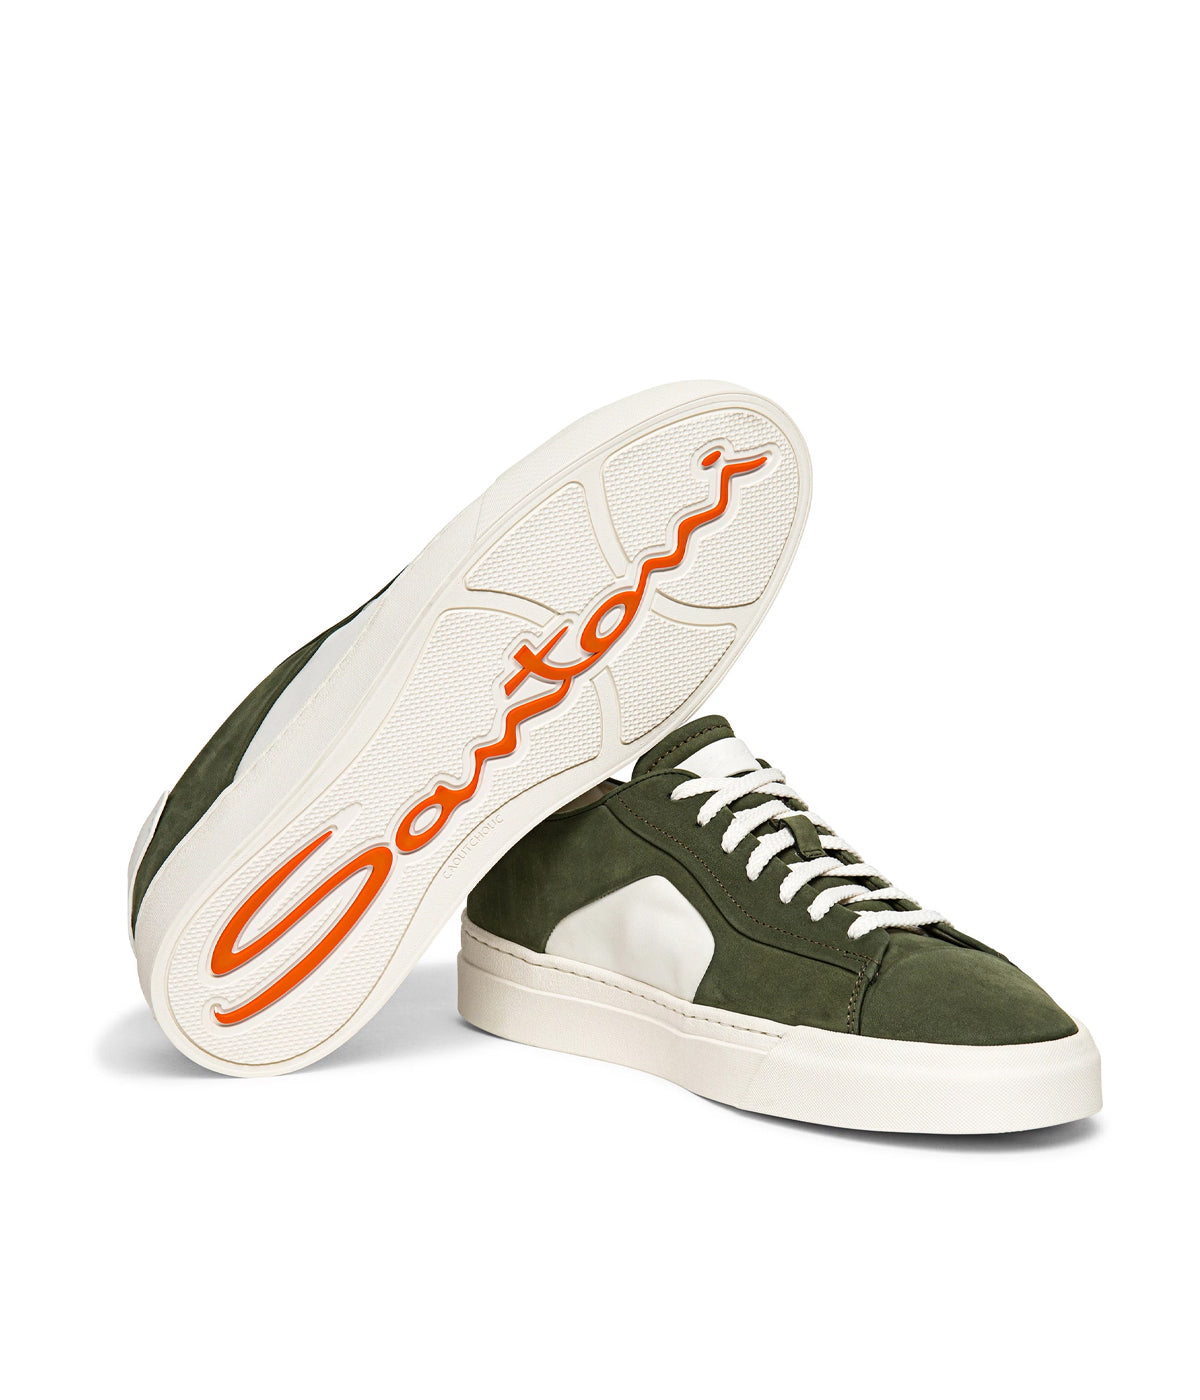 Darts Nubuck Low Top Sneakers in Olive Green